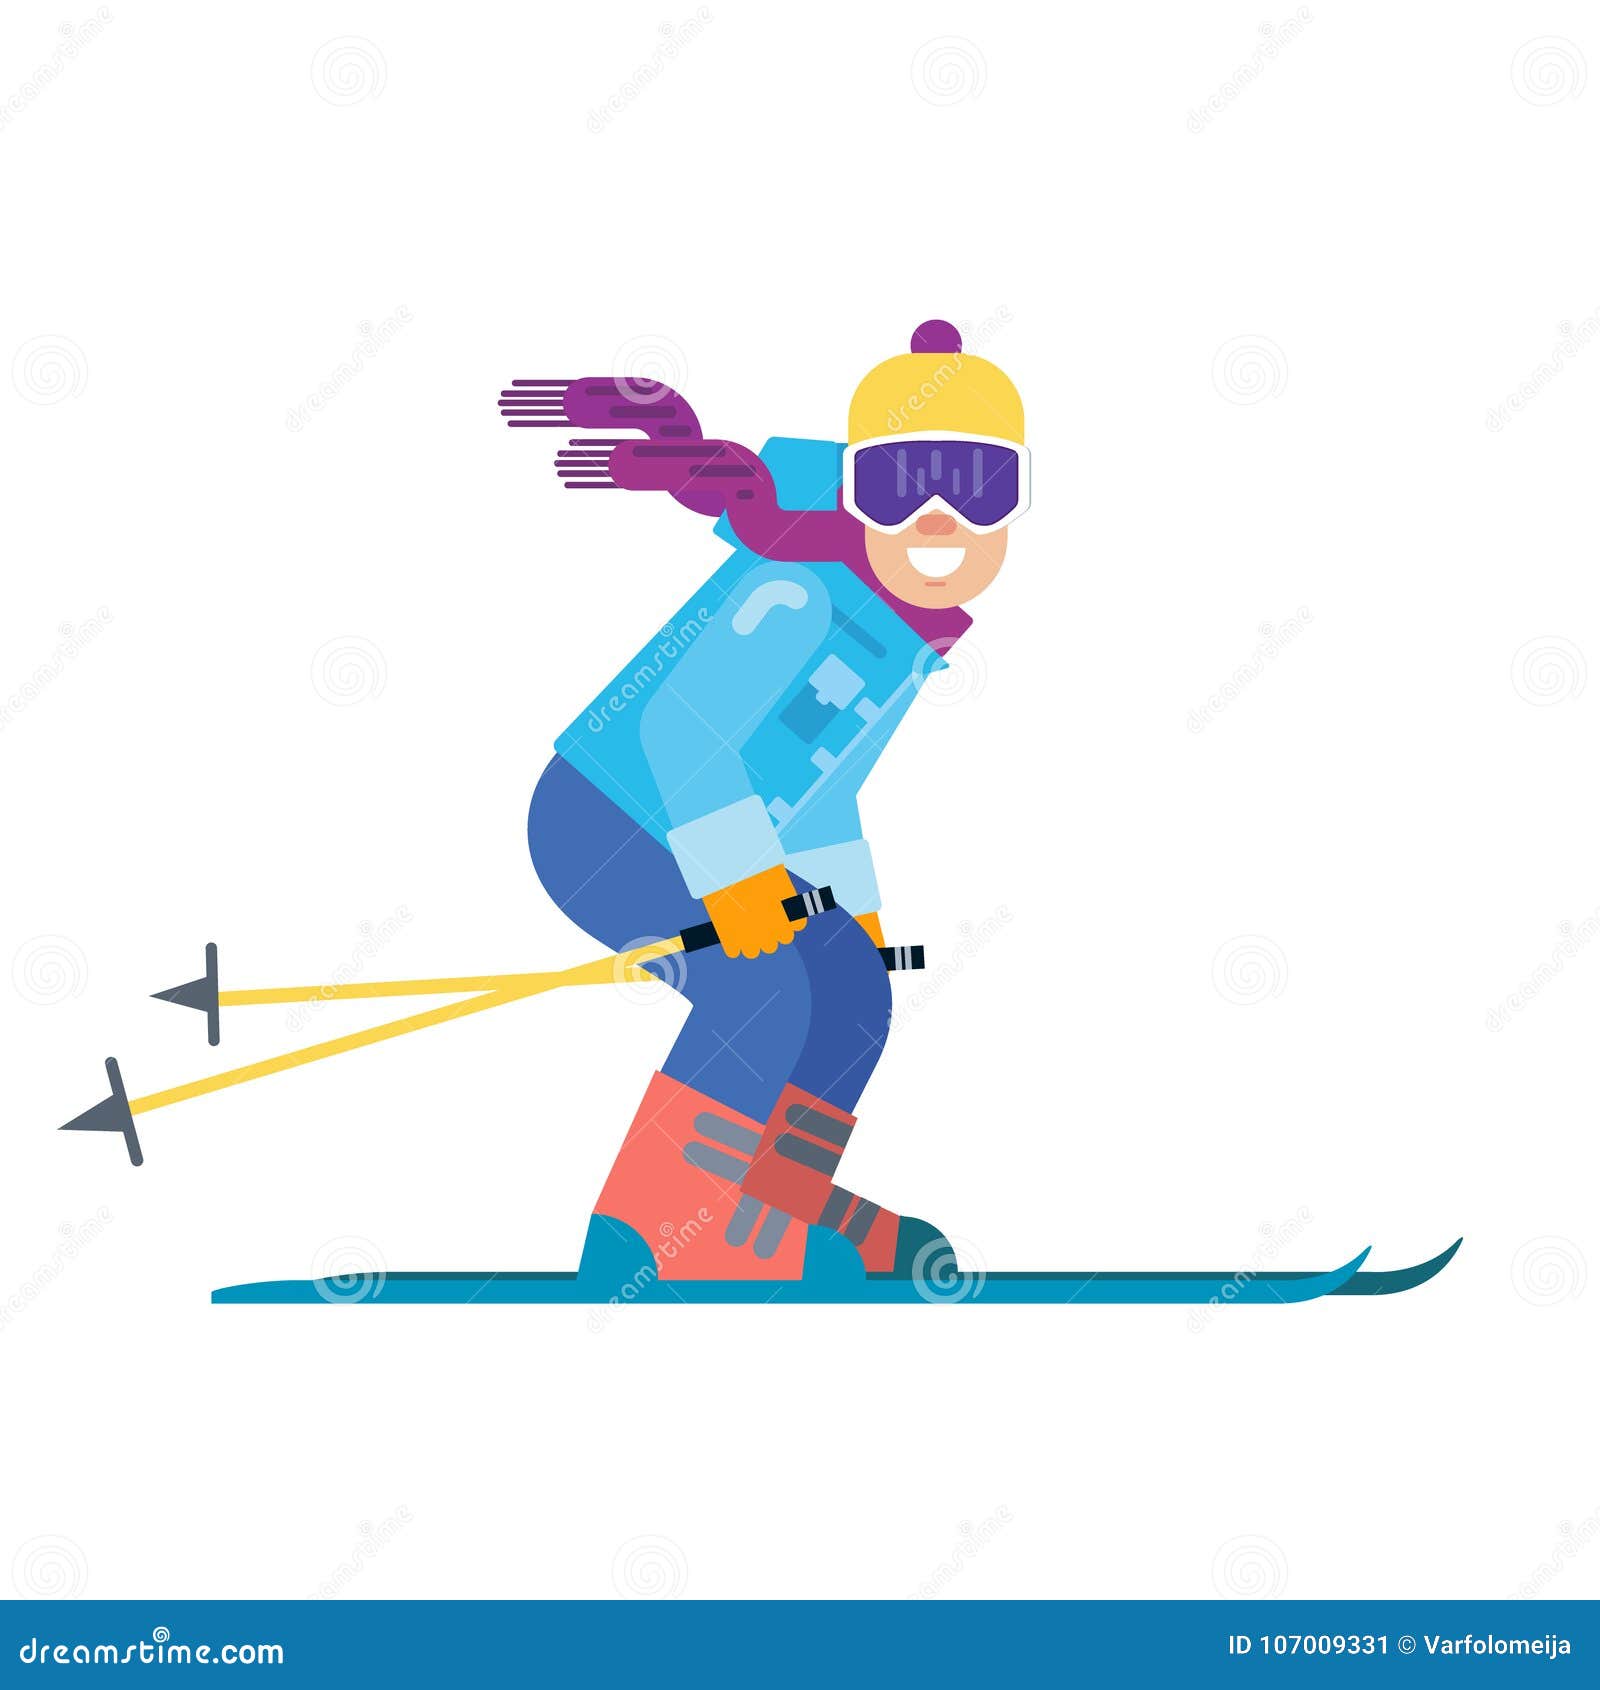 Cute Skier Girl Ski Winter Sport Resort Holidays Skiing Mountain Isolated  Character Flat Design Vector Illustration Stock Vector - Illustration of  character, recreational: 132827590